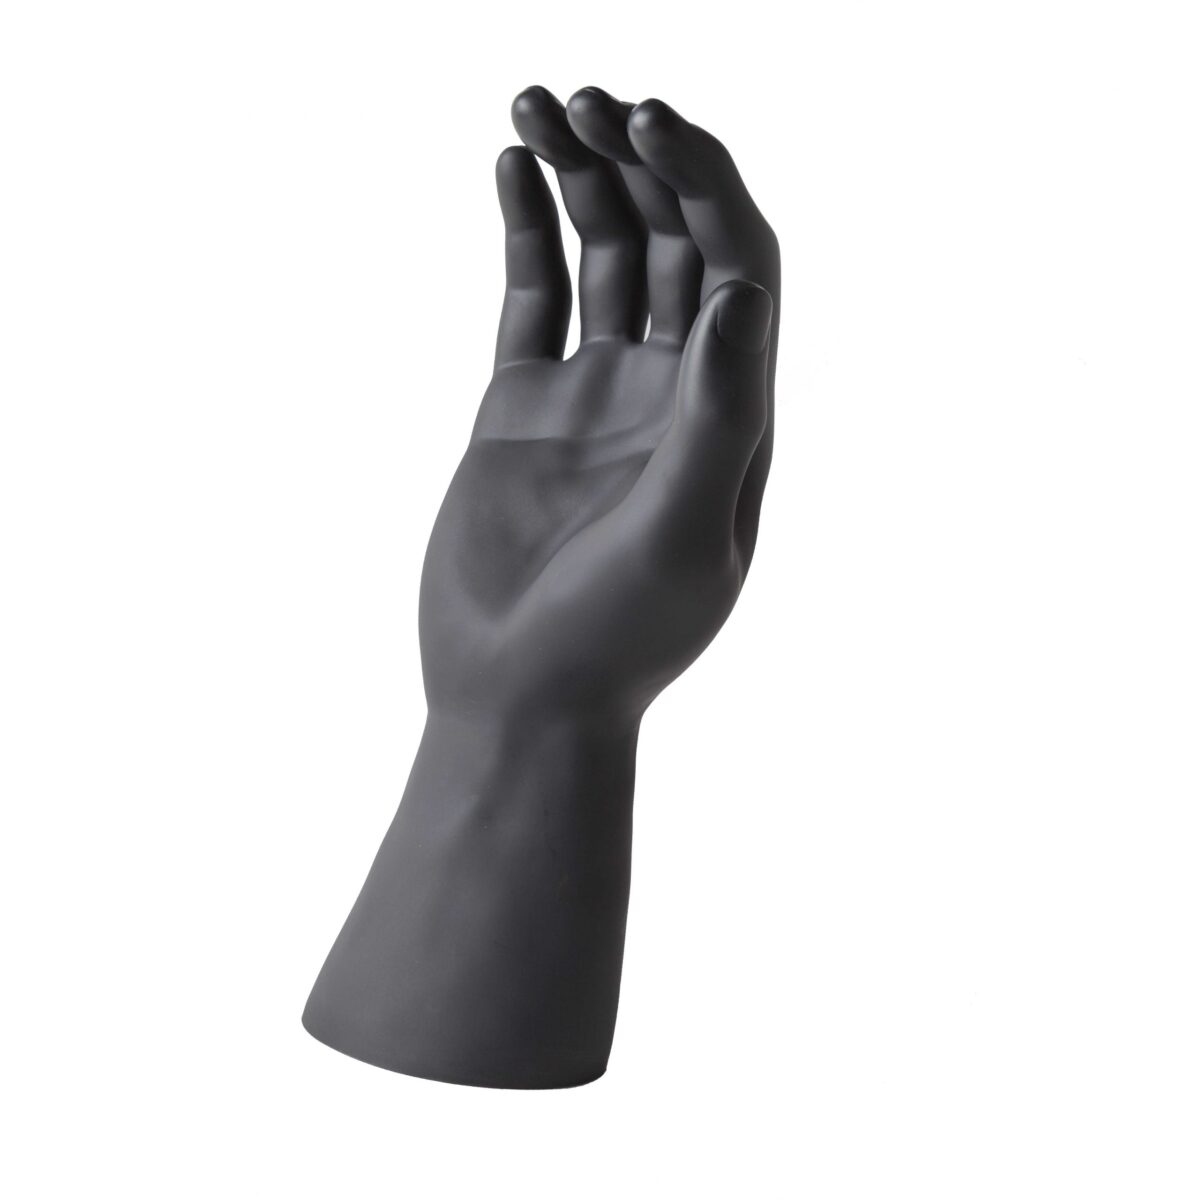 Male Glove Display Hand